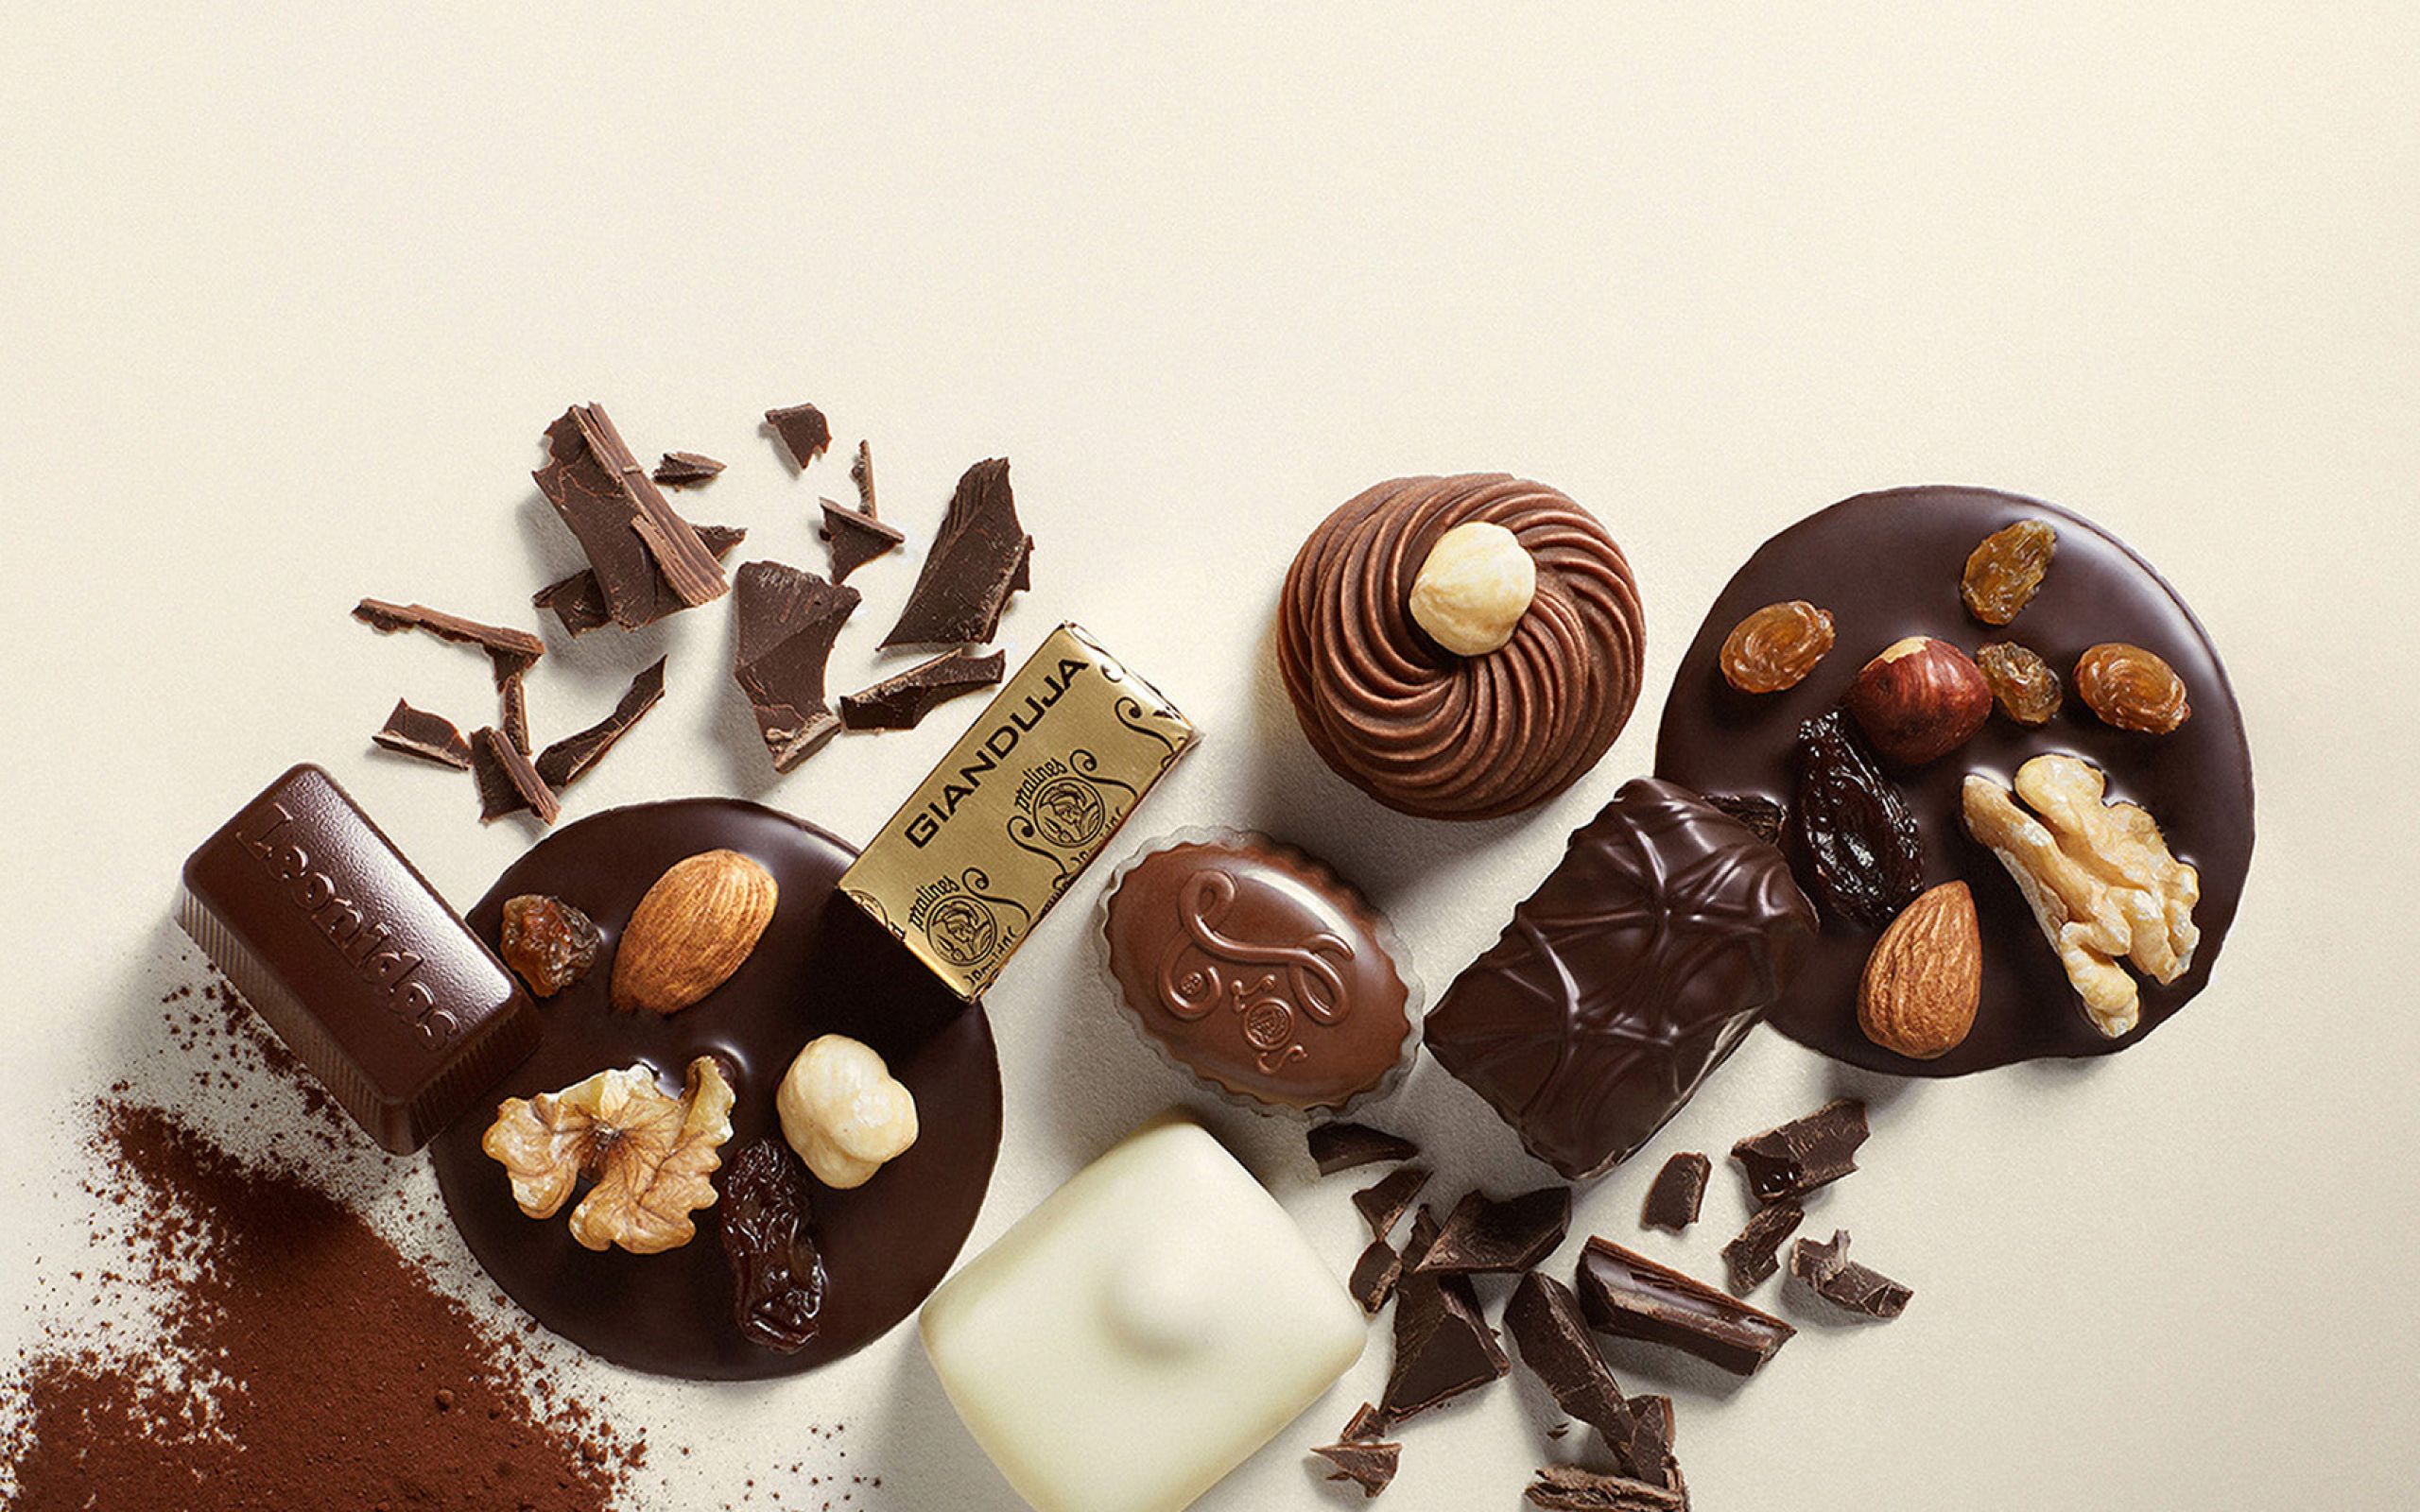 Шоколад столе. Бельгийский шоколад Leonidas. Шоколадные конфеты. Конфеты шоколад. Конфеты печенье.